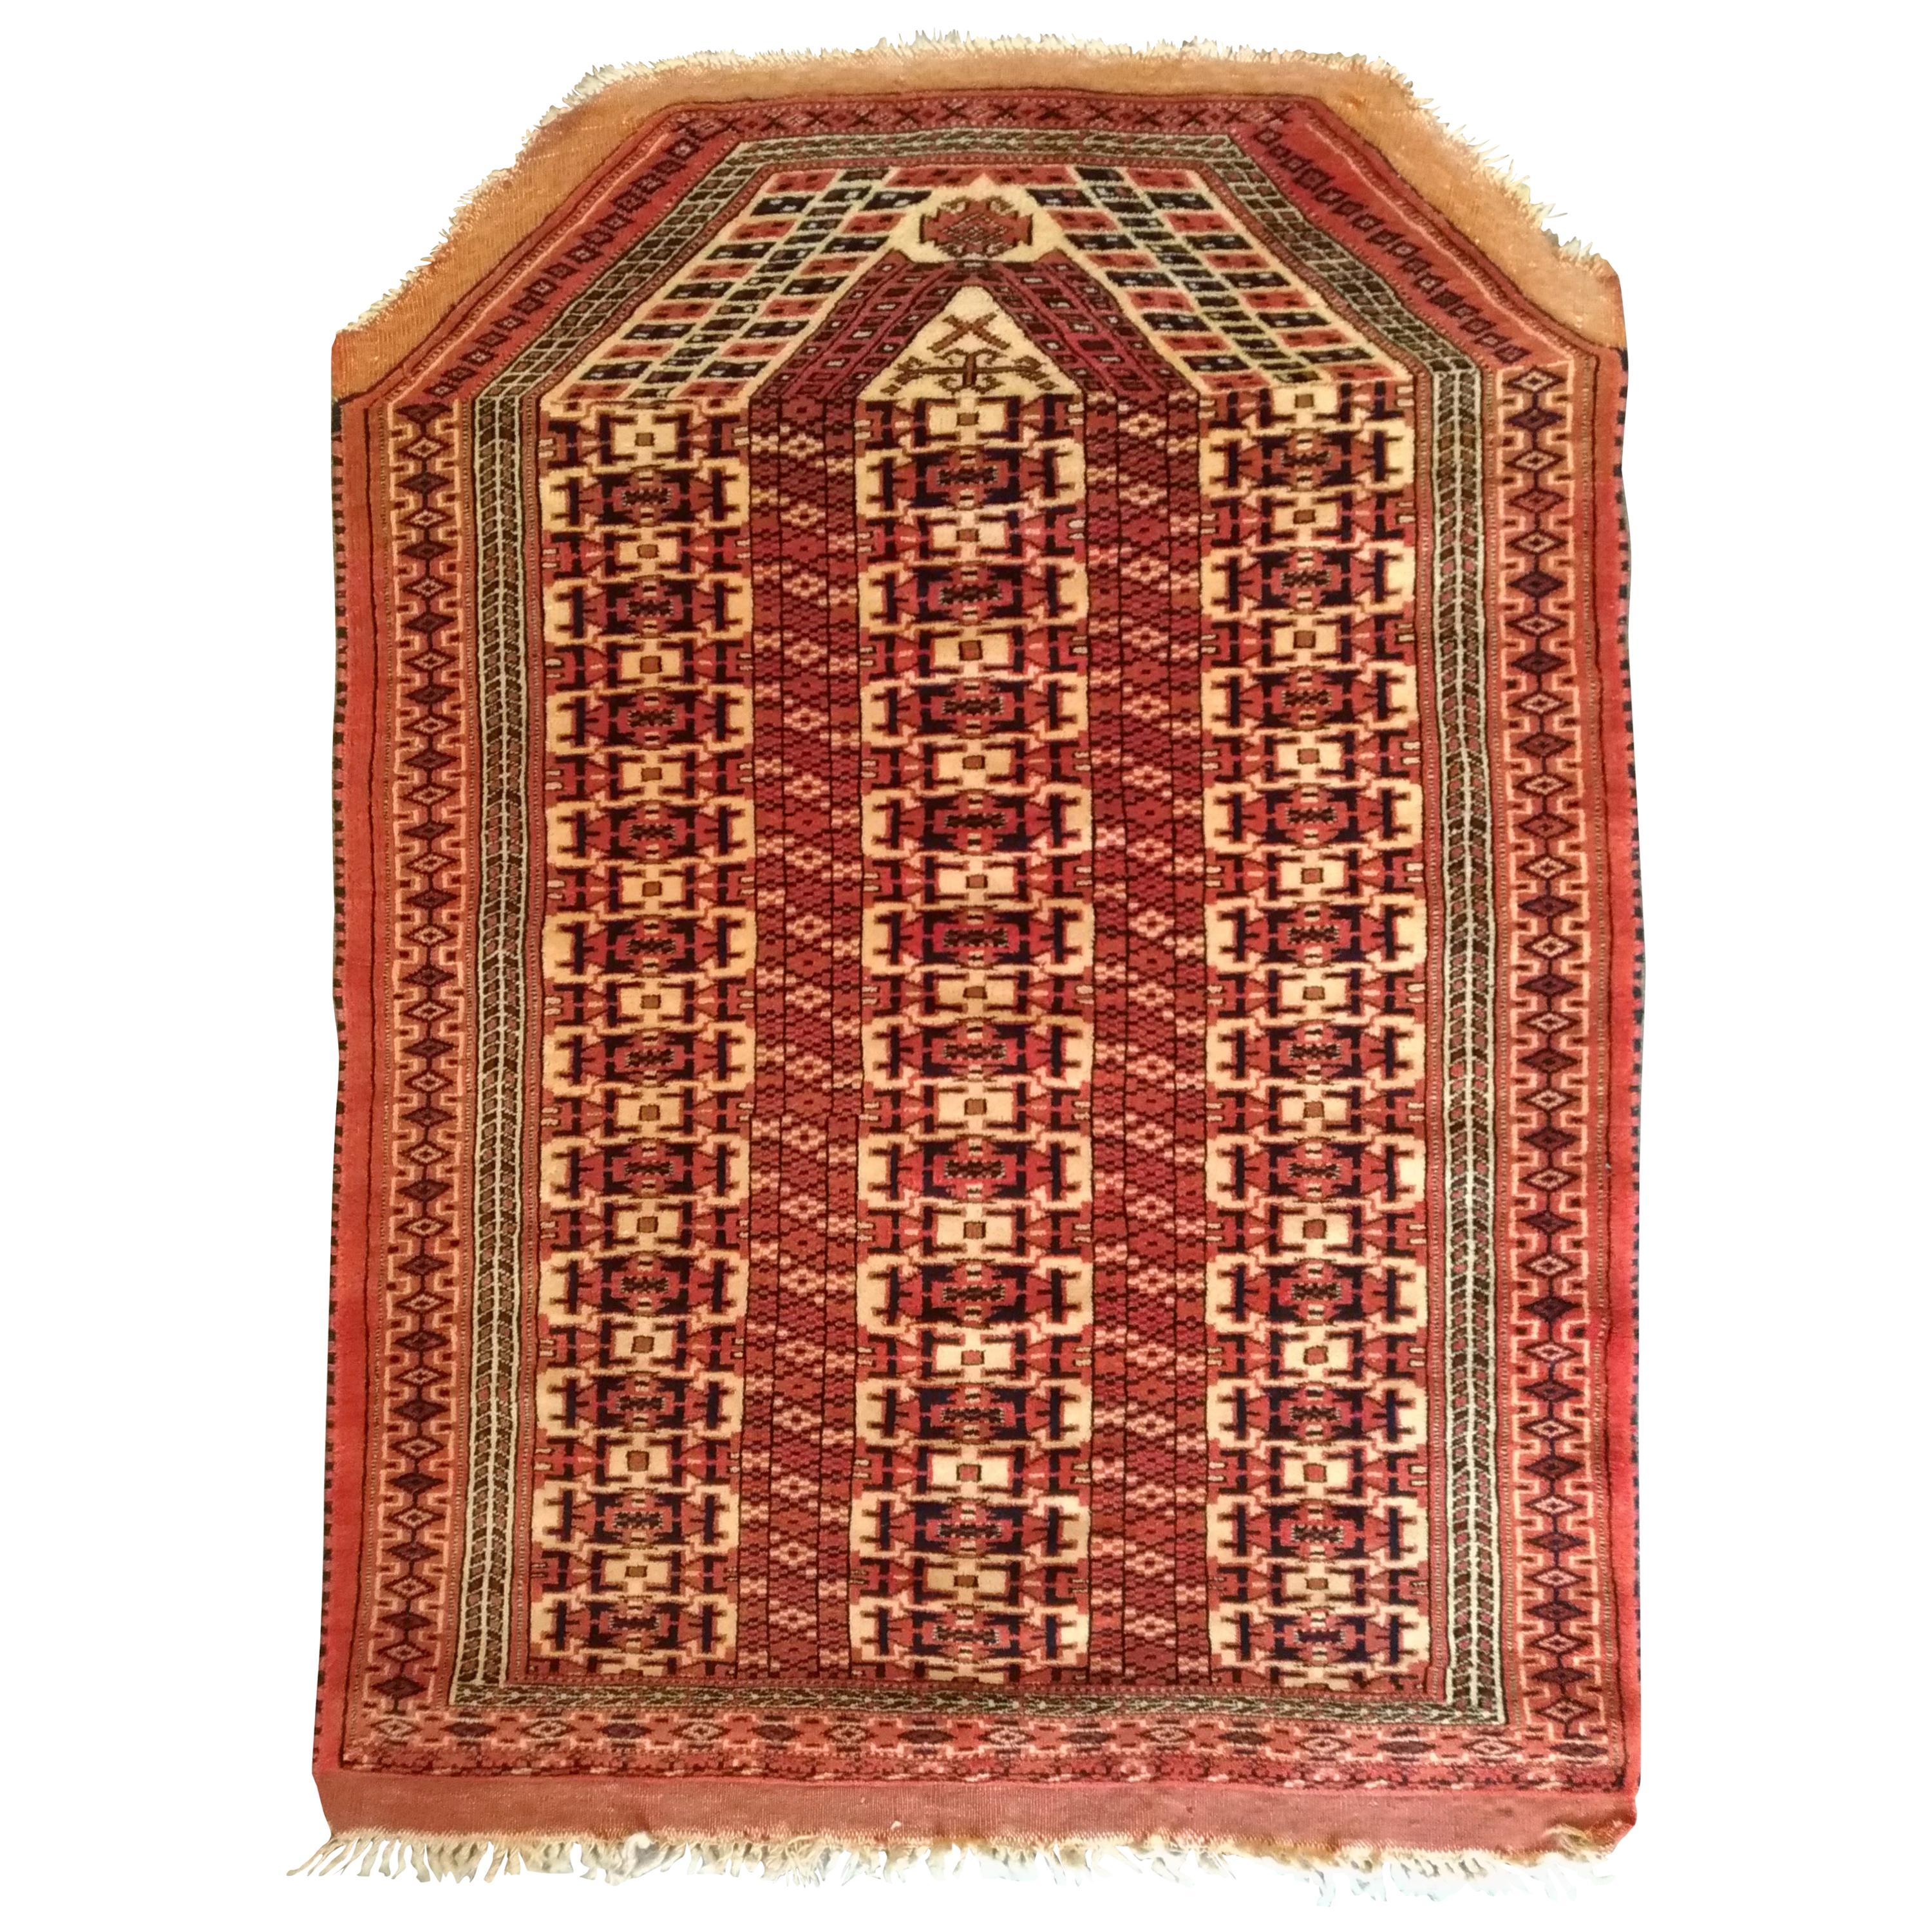 955 -  Ancient Carpet from Turkmenistan